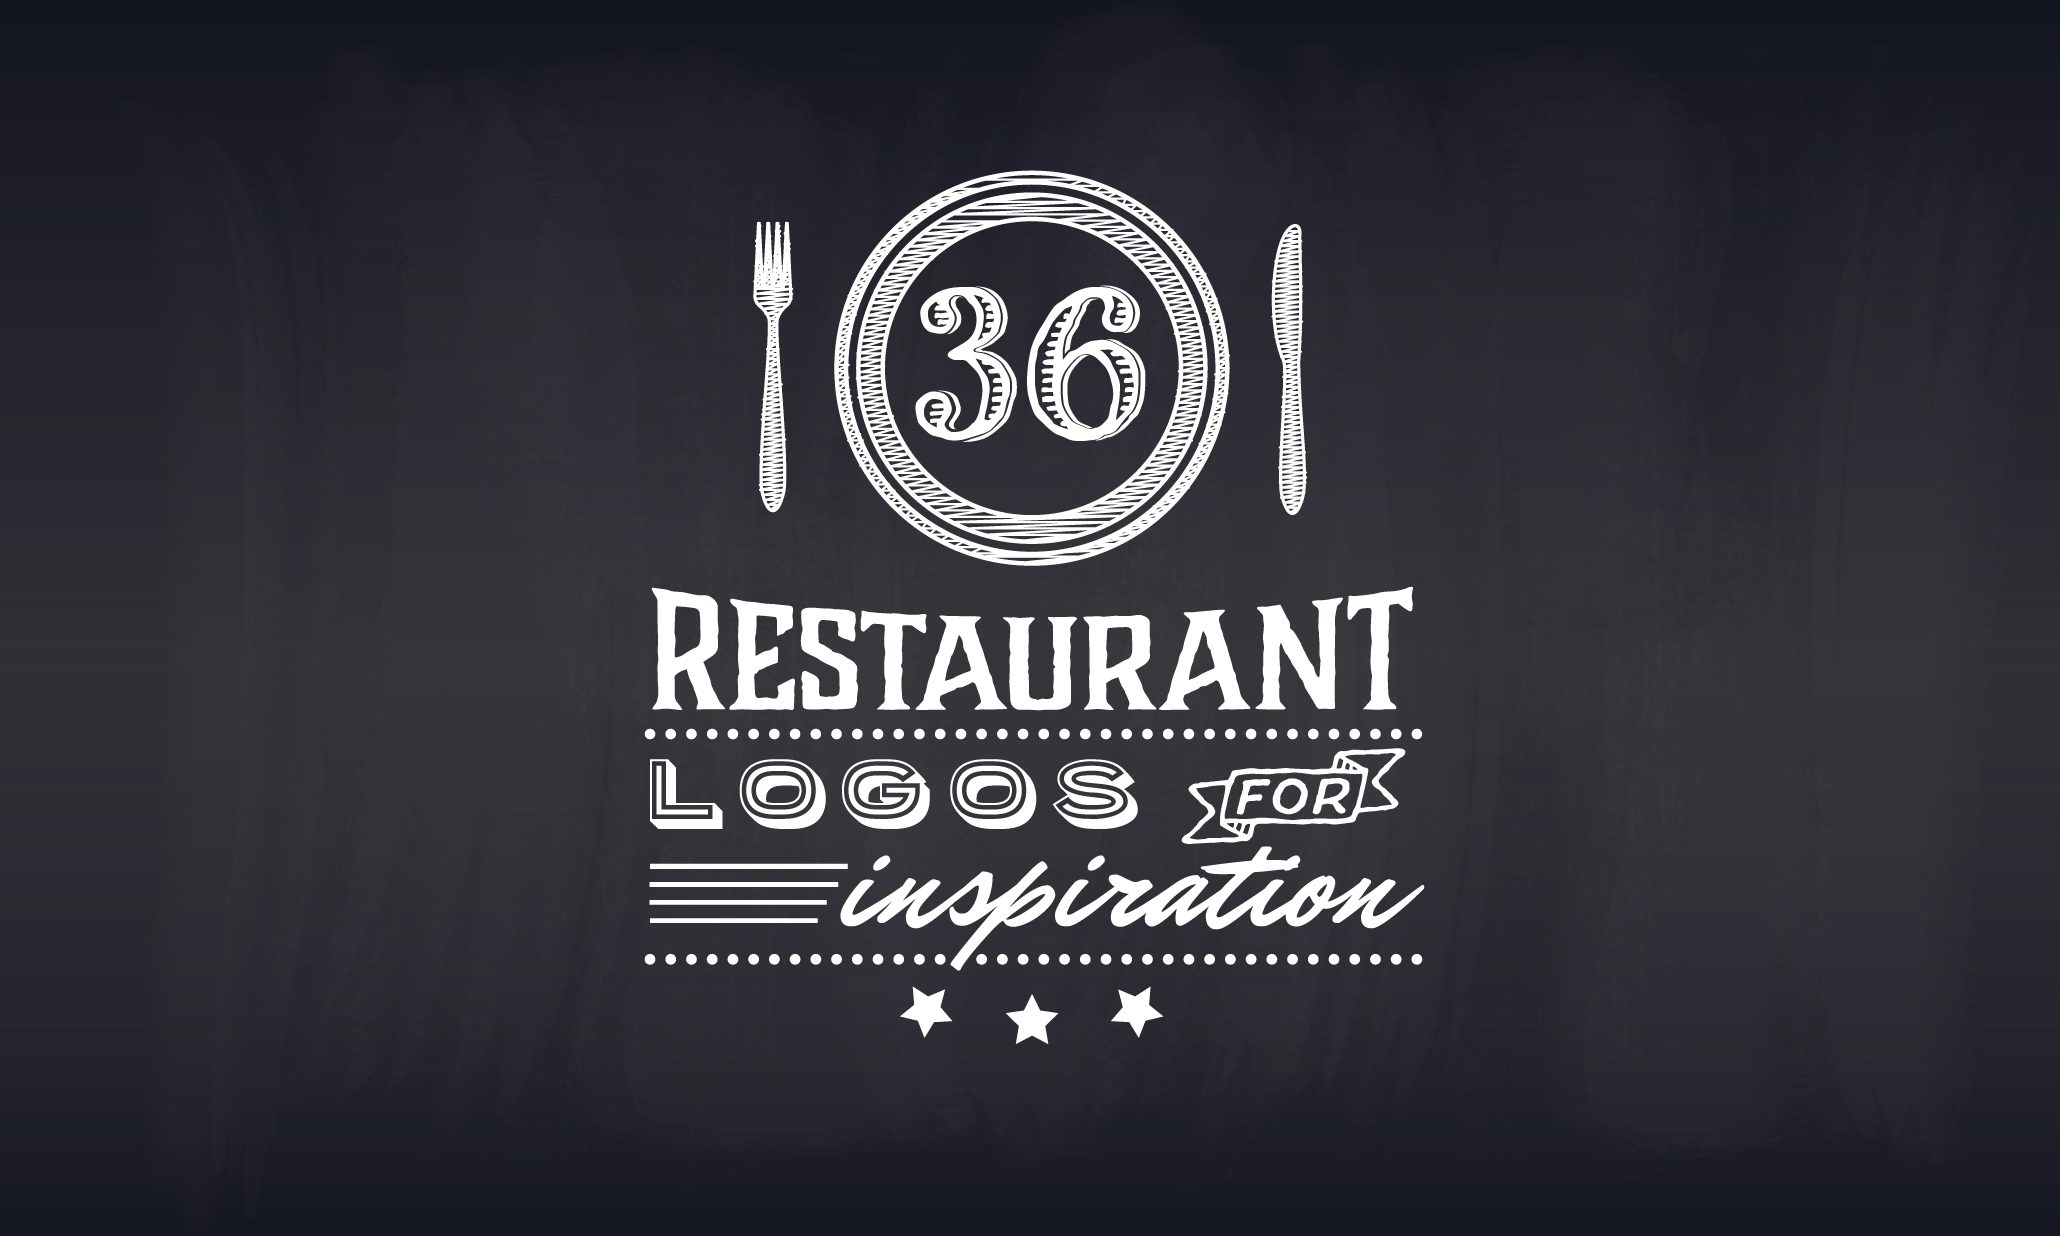 36 Of The Best Restaurant Logos For Inspiration 99designs